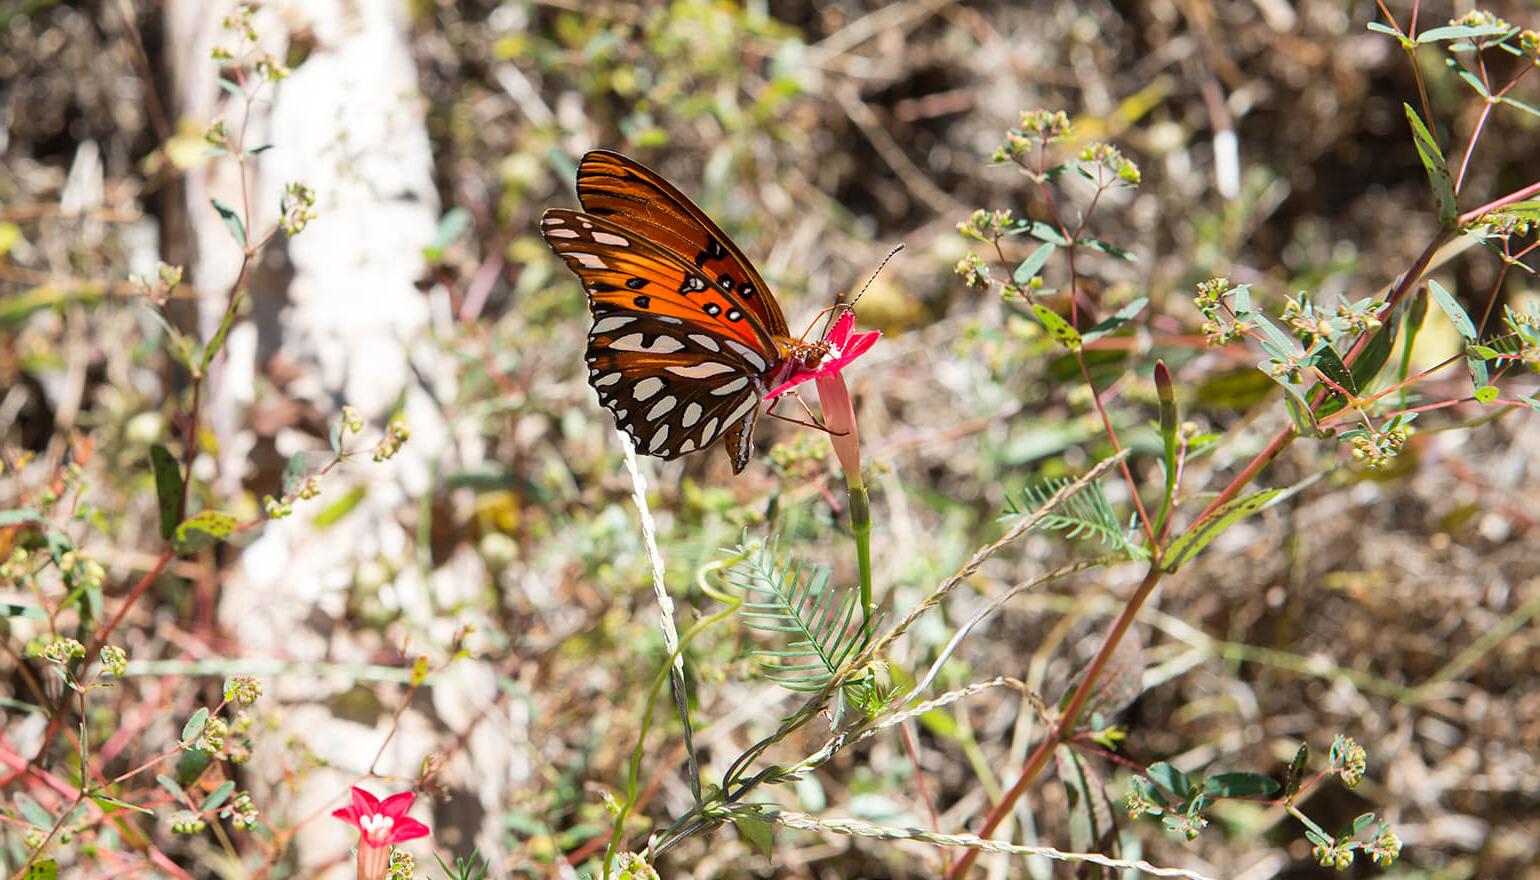 Butterfly in bushes